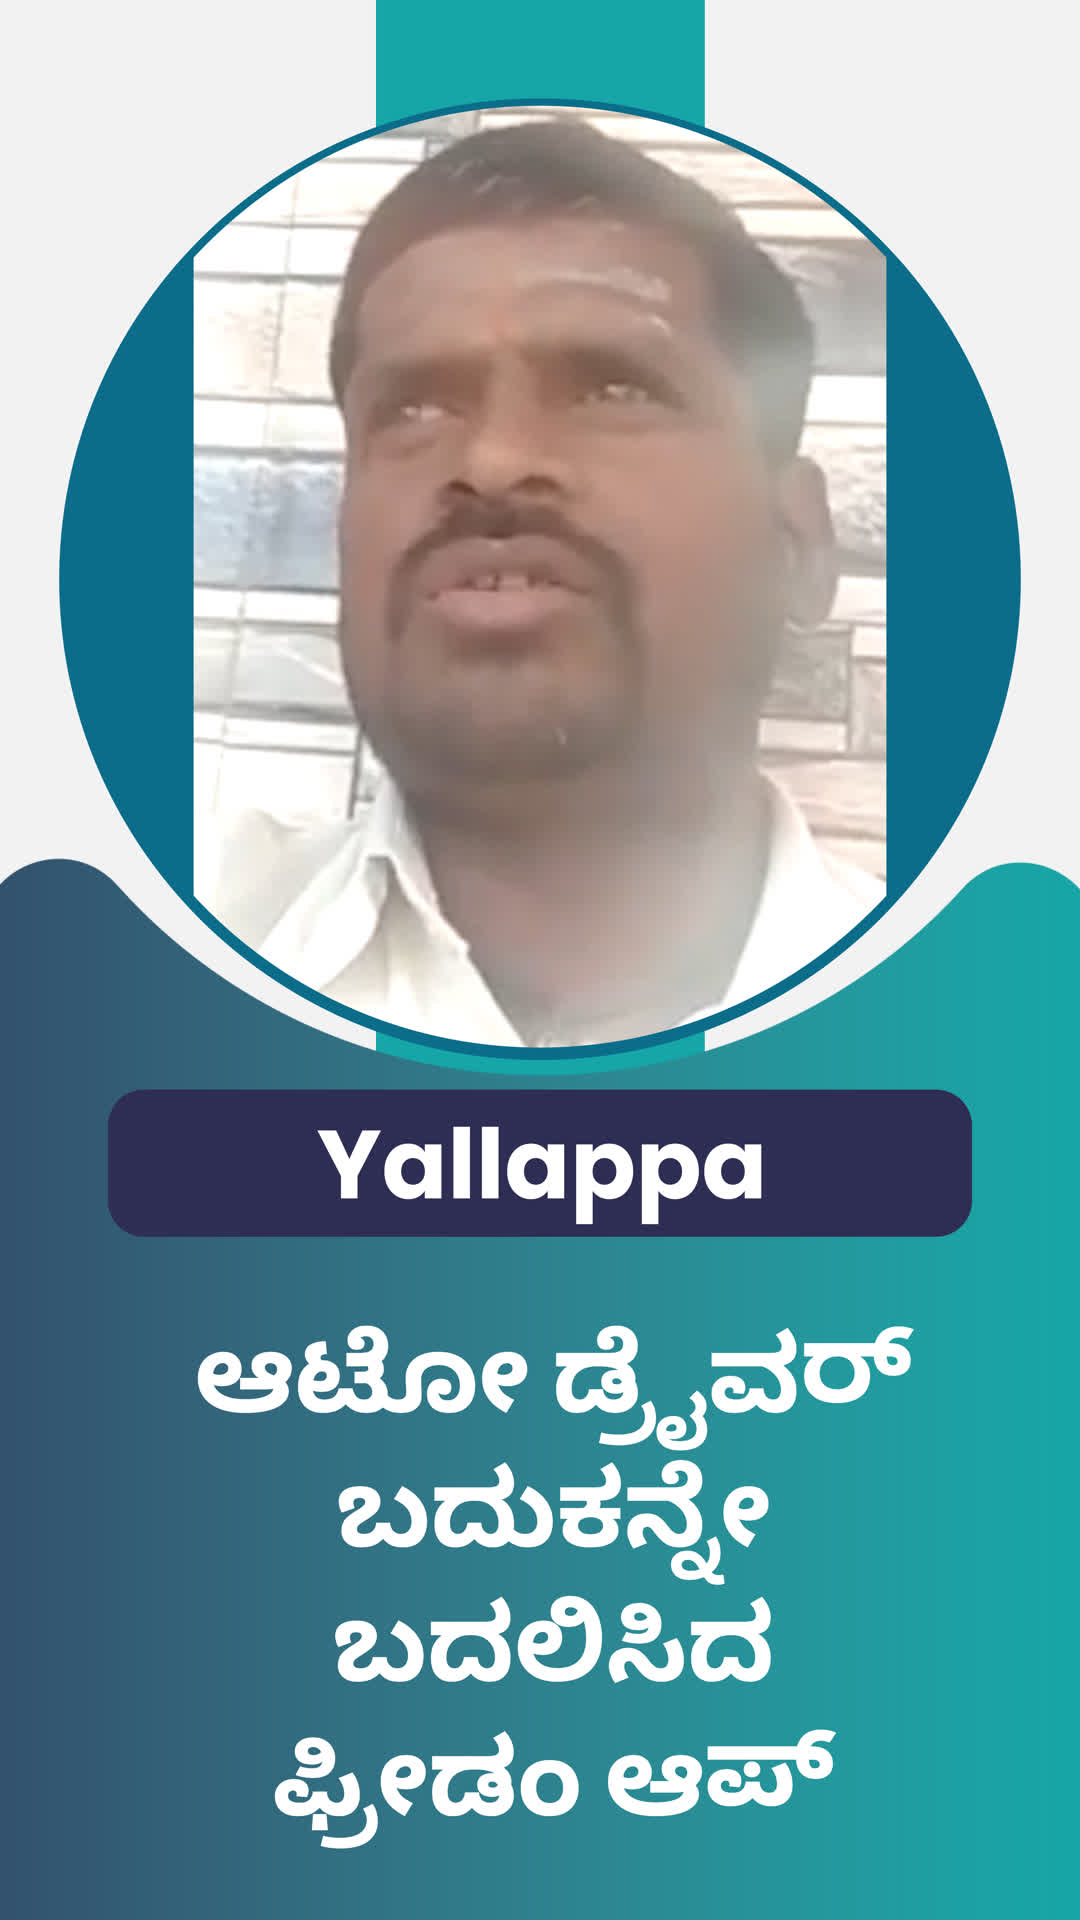 Yallappa, ganiyavar's Honest Review of ffreedom app - Hubballi ,Karnataka